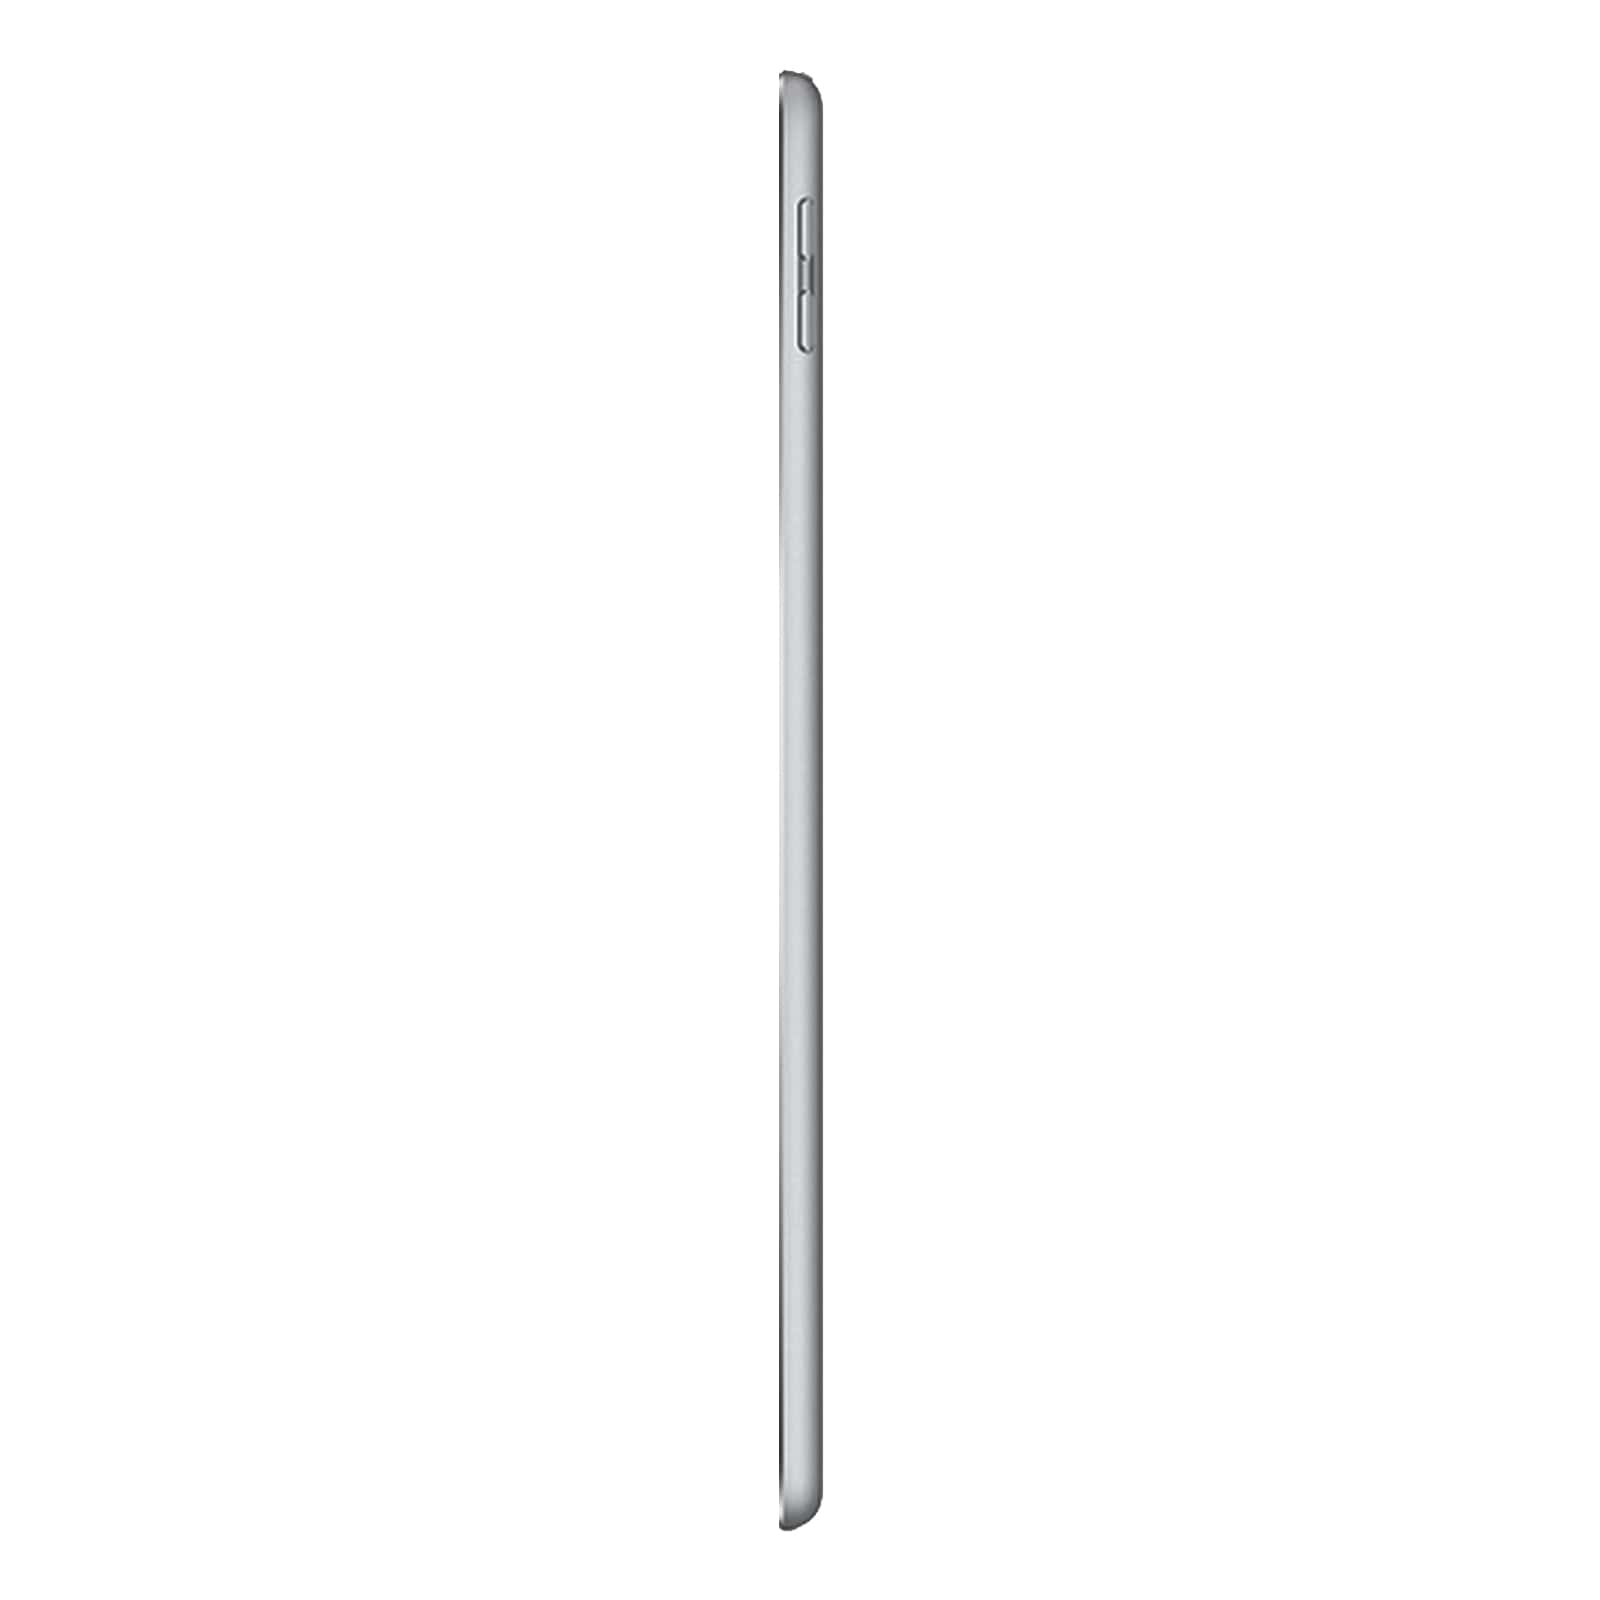 Apple iPad 6 32GB WiFi Space Grey - Very Good